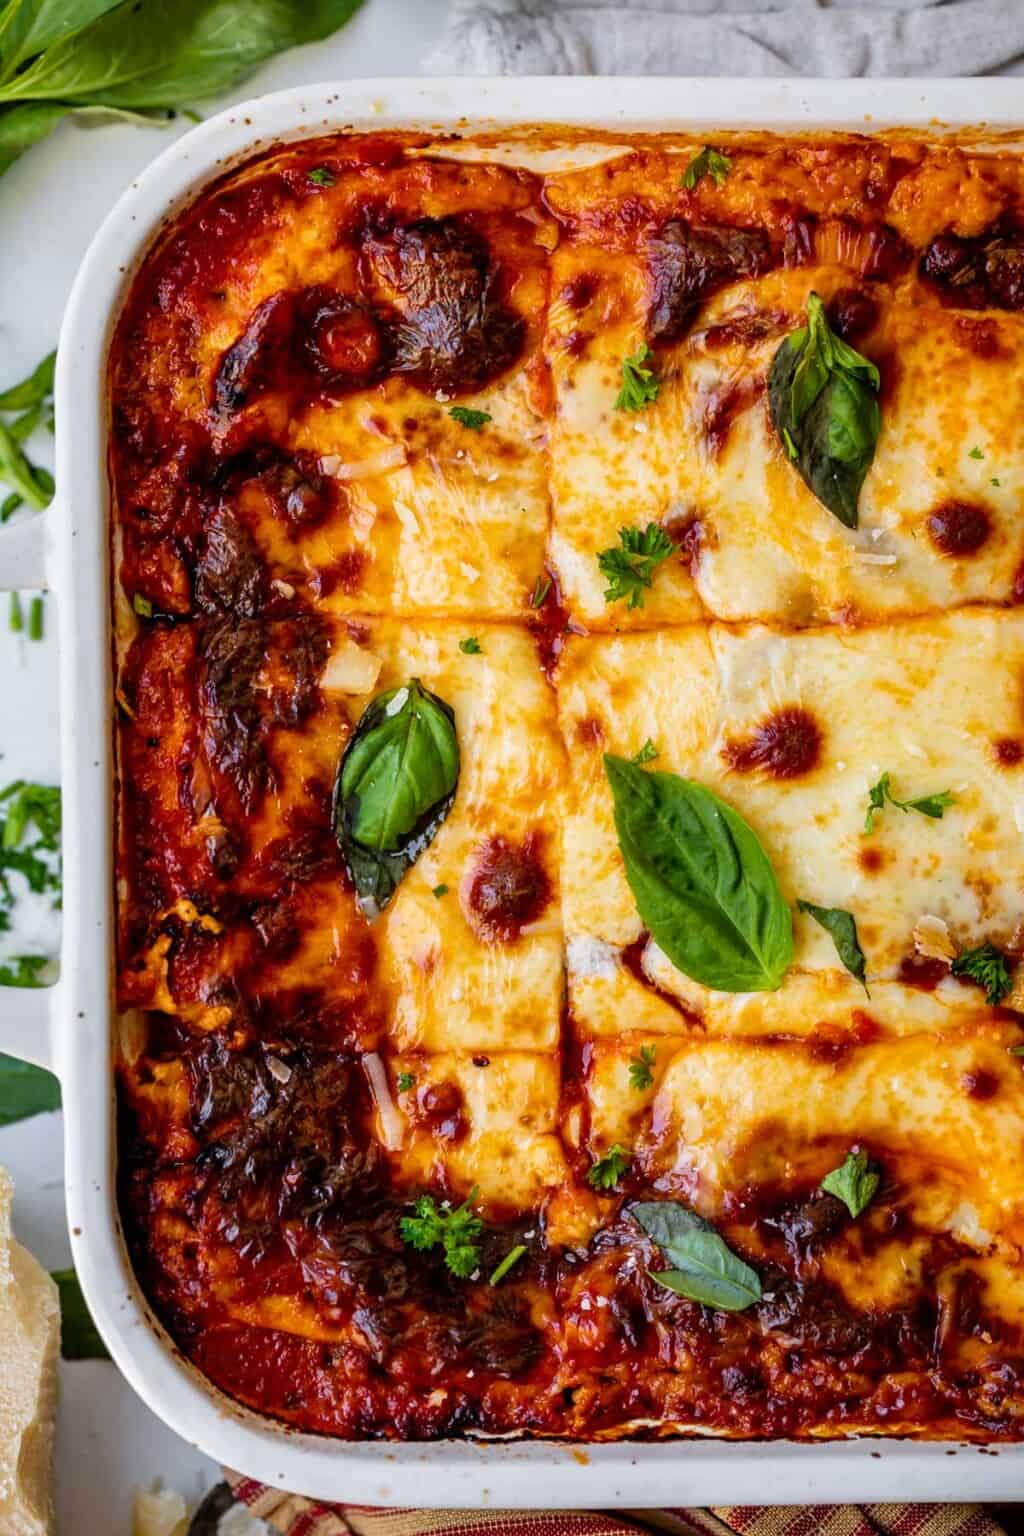 Killer Homemade Lasagna Recipe - The Food Charlatan